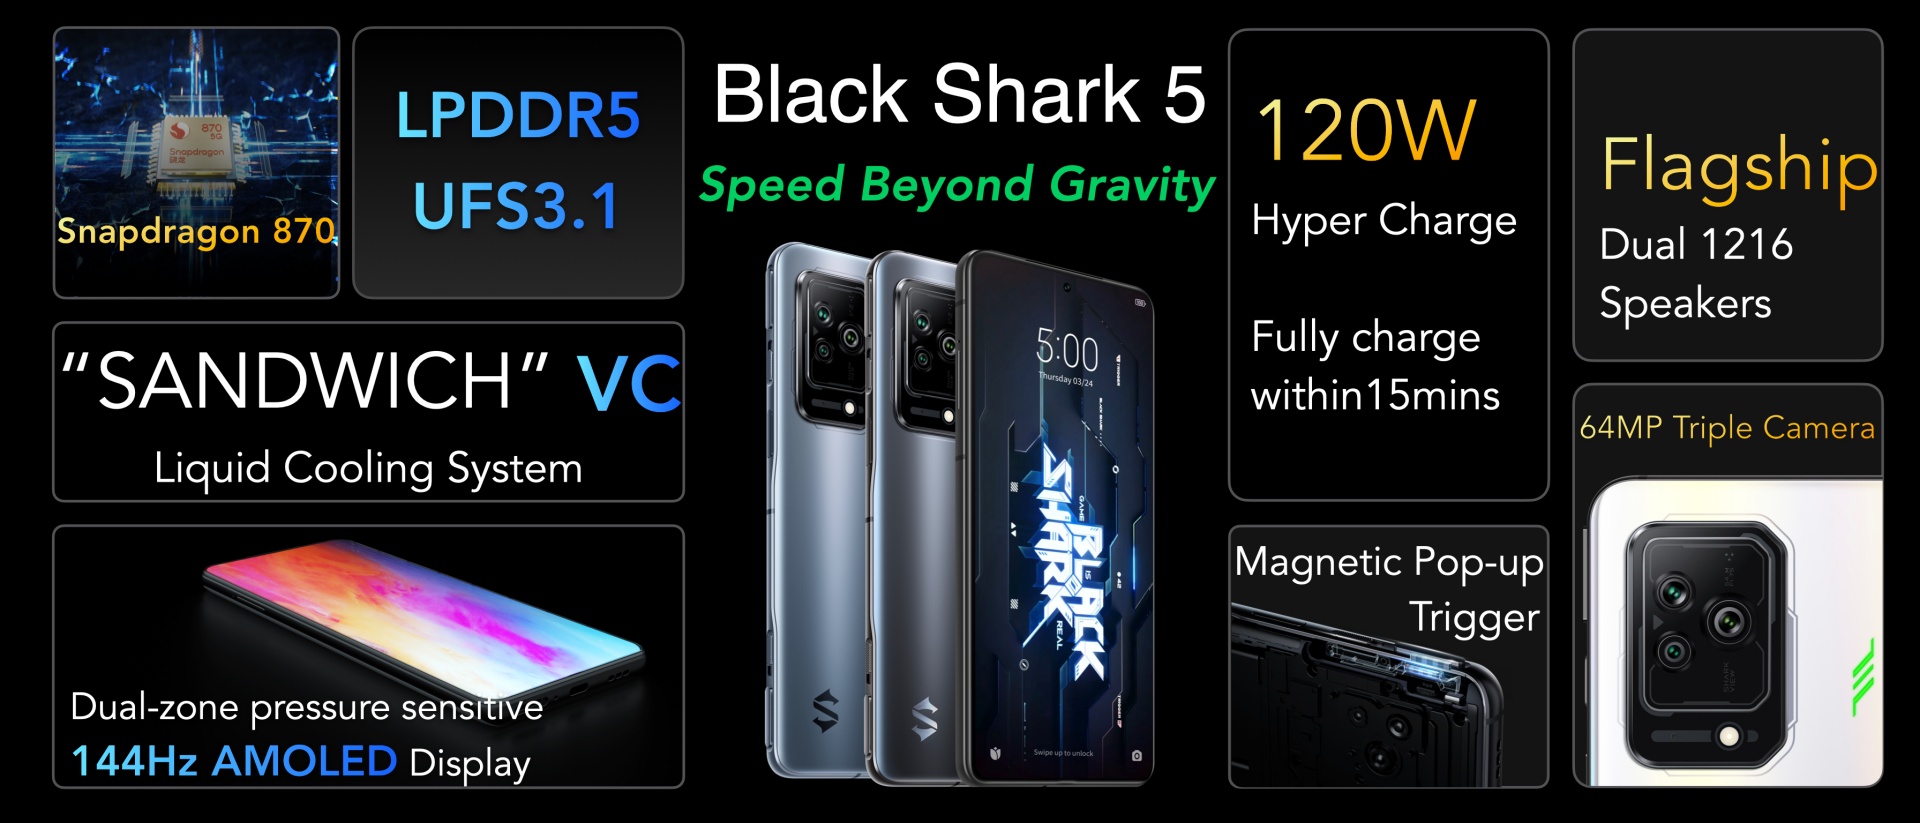 Black Shark 5